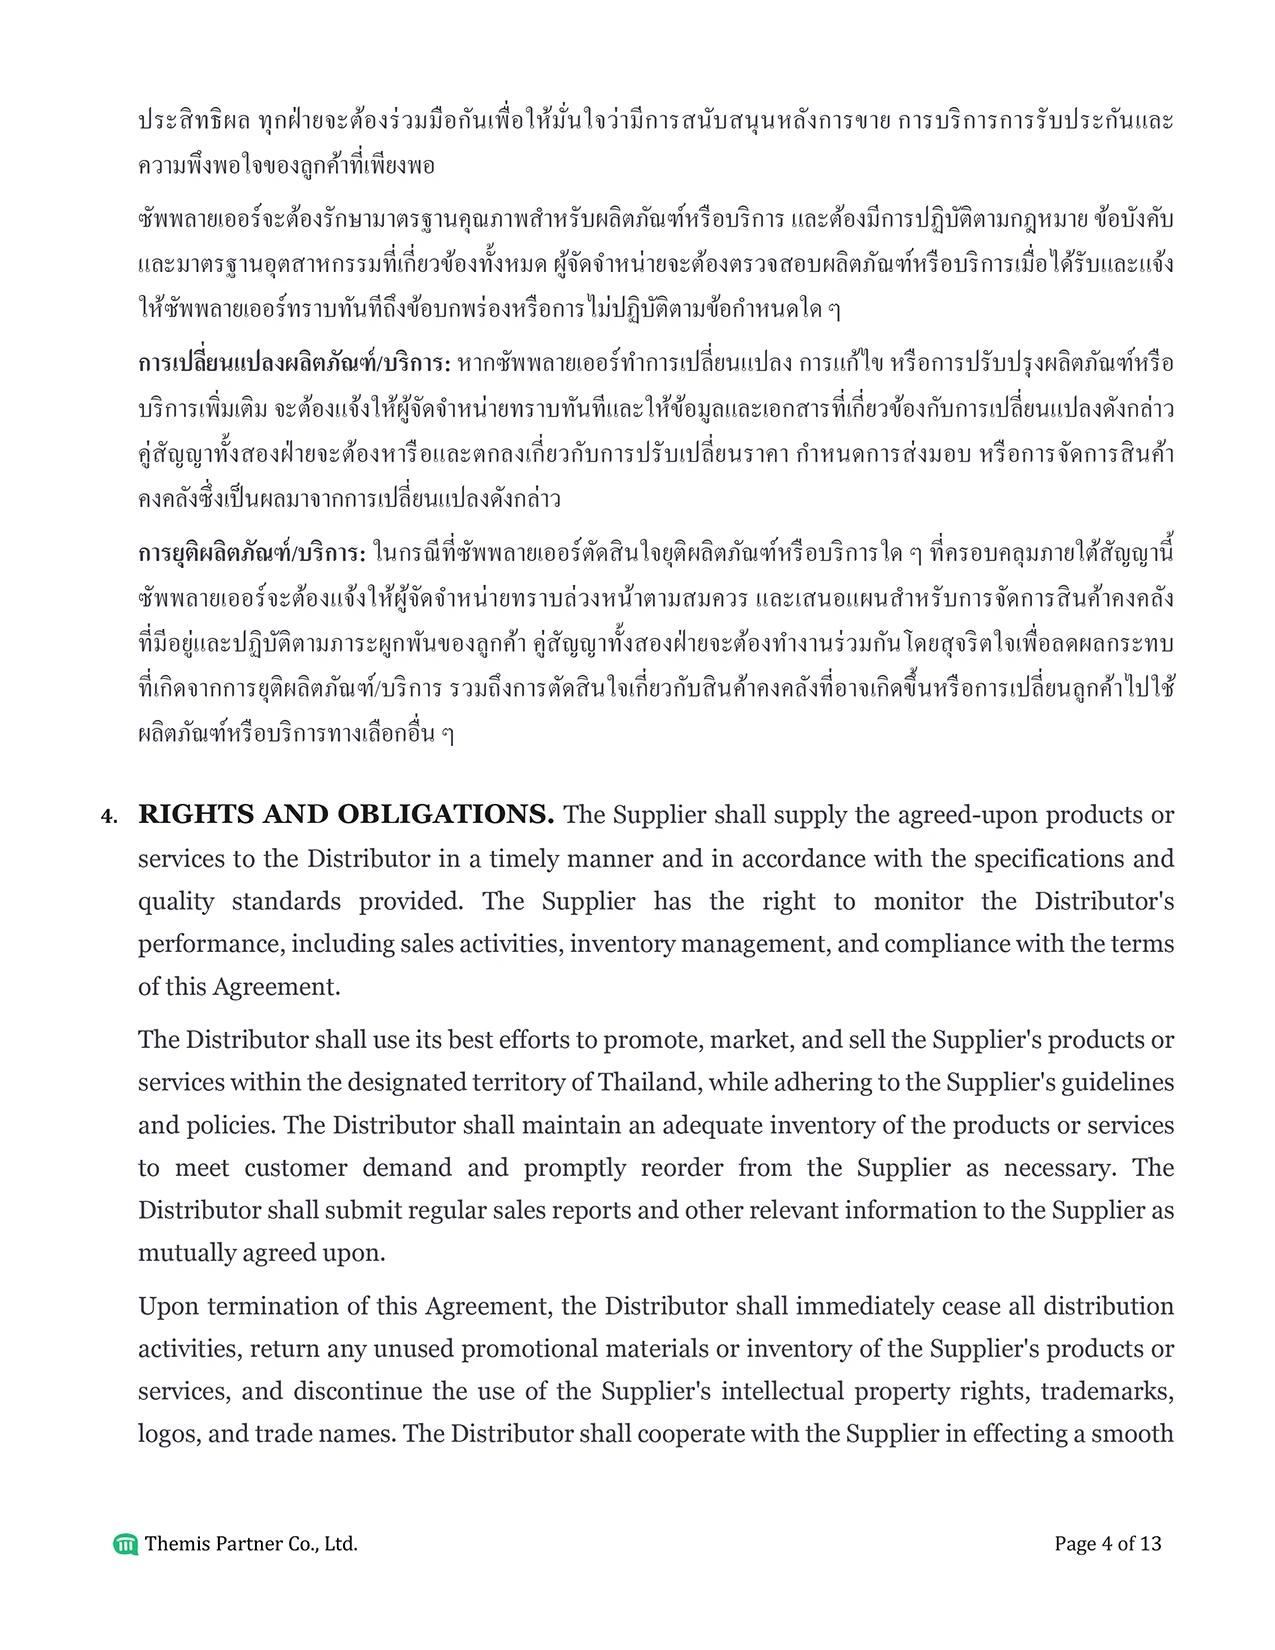 Distribution agreement Thailand 4